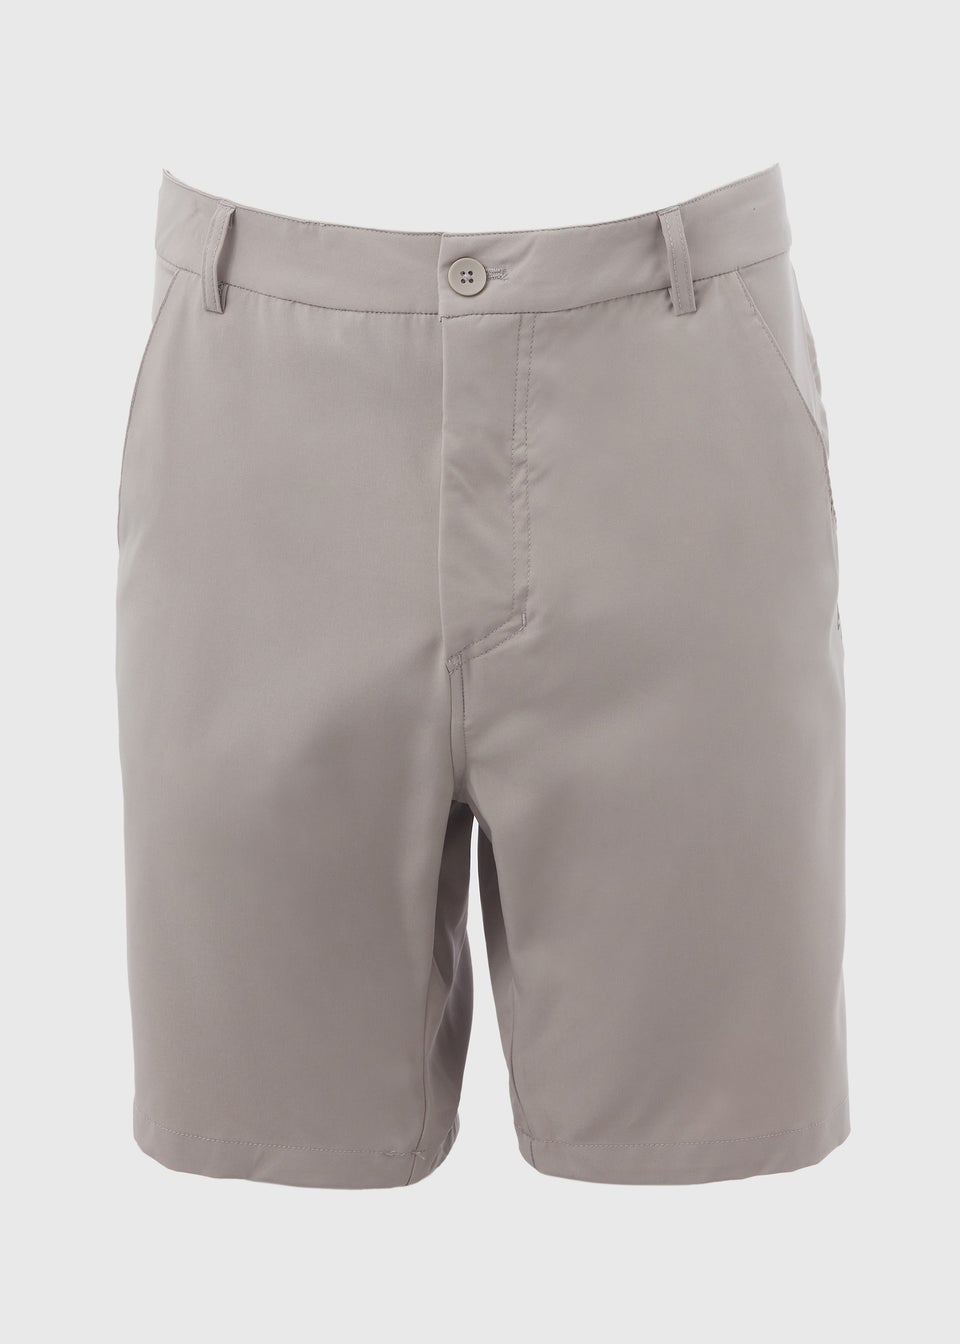 Souluxe Grey Golf Shorts